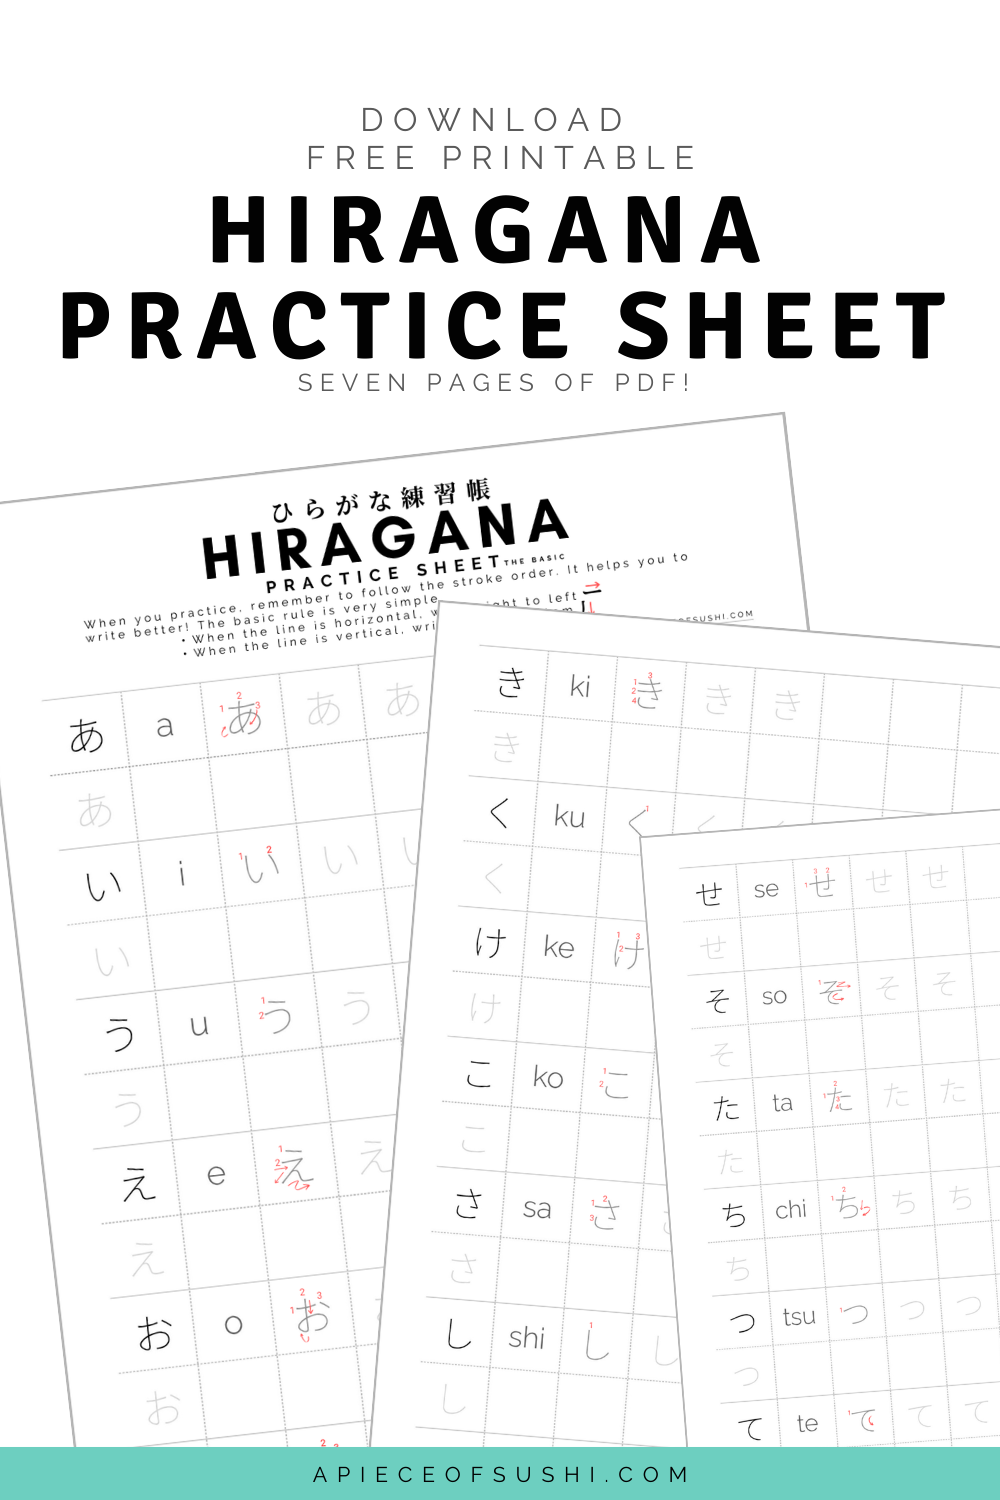 hiragana-practice-sheet-free-download-7-pages-workbook-printable